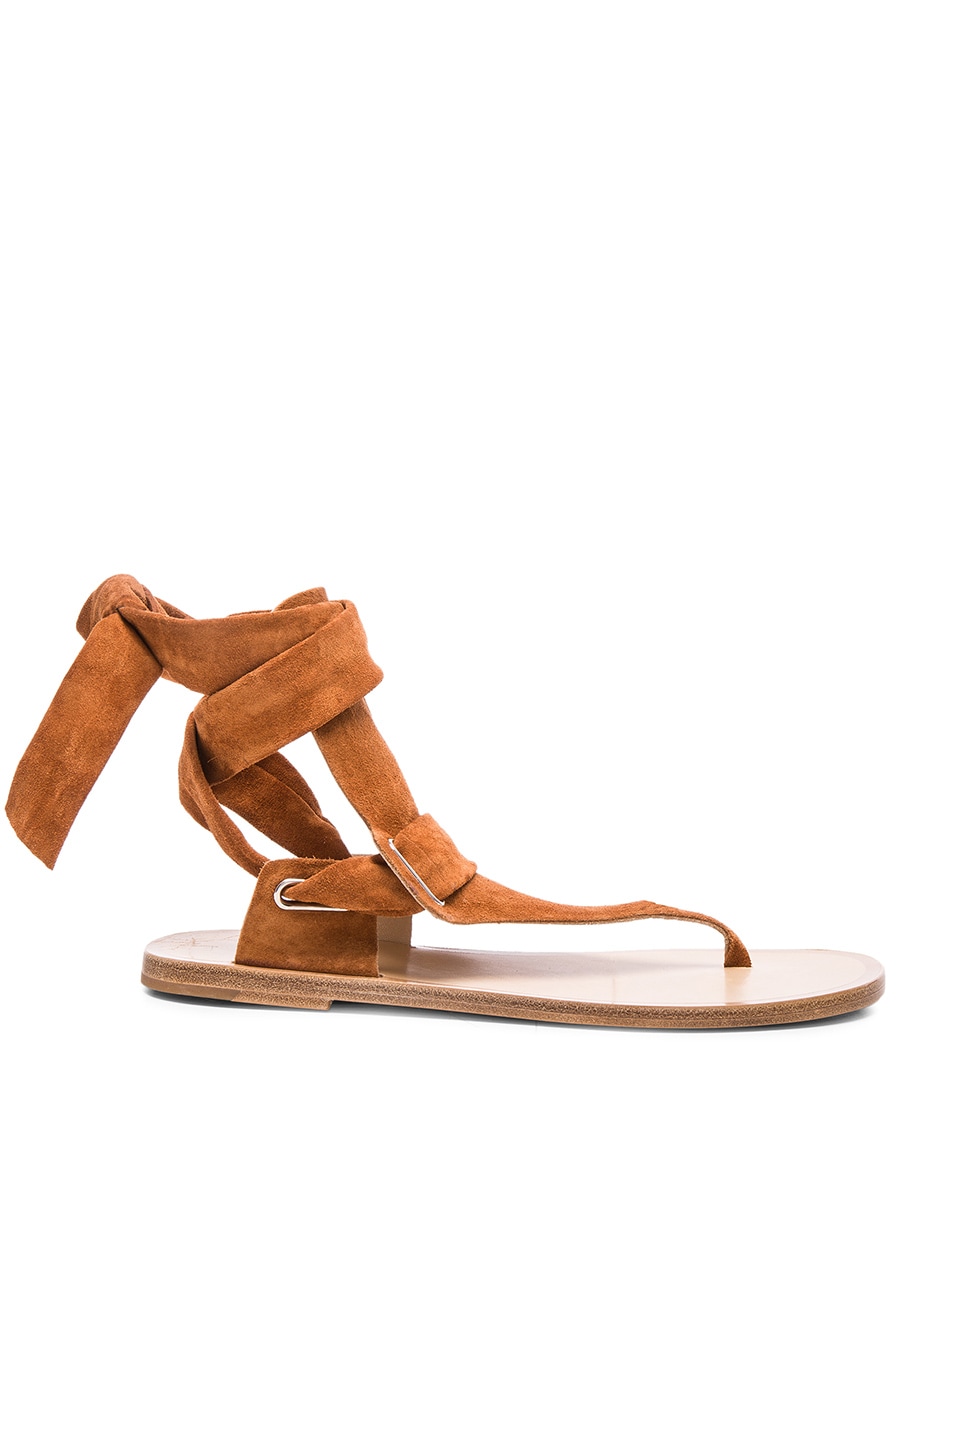 Image 1 of Rag & Bone Suede Mara Sandals in Tan Suede